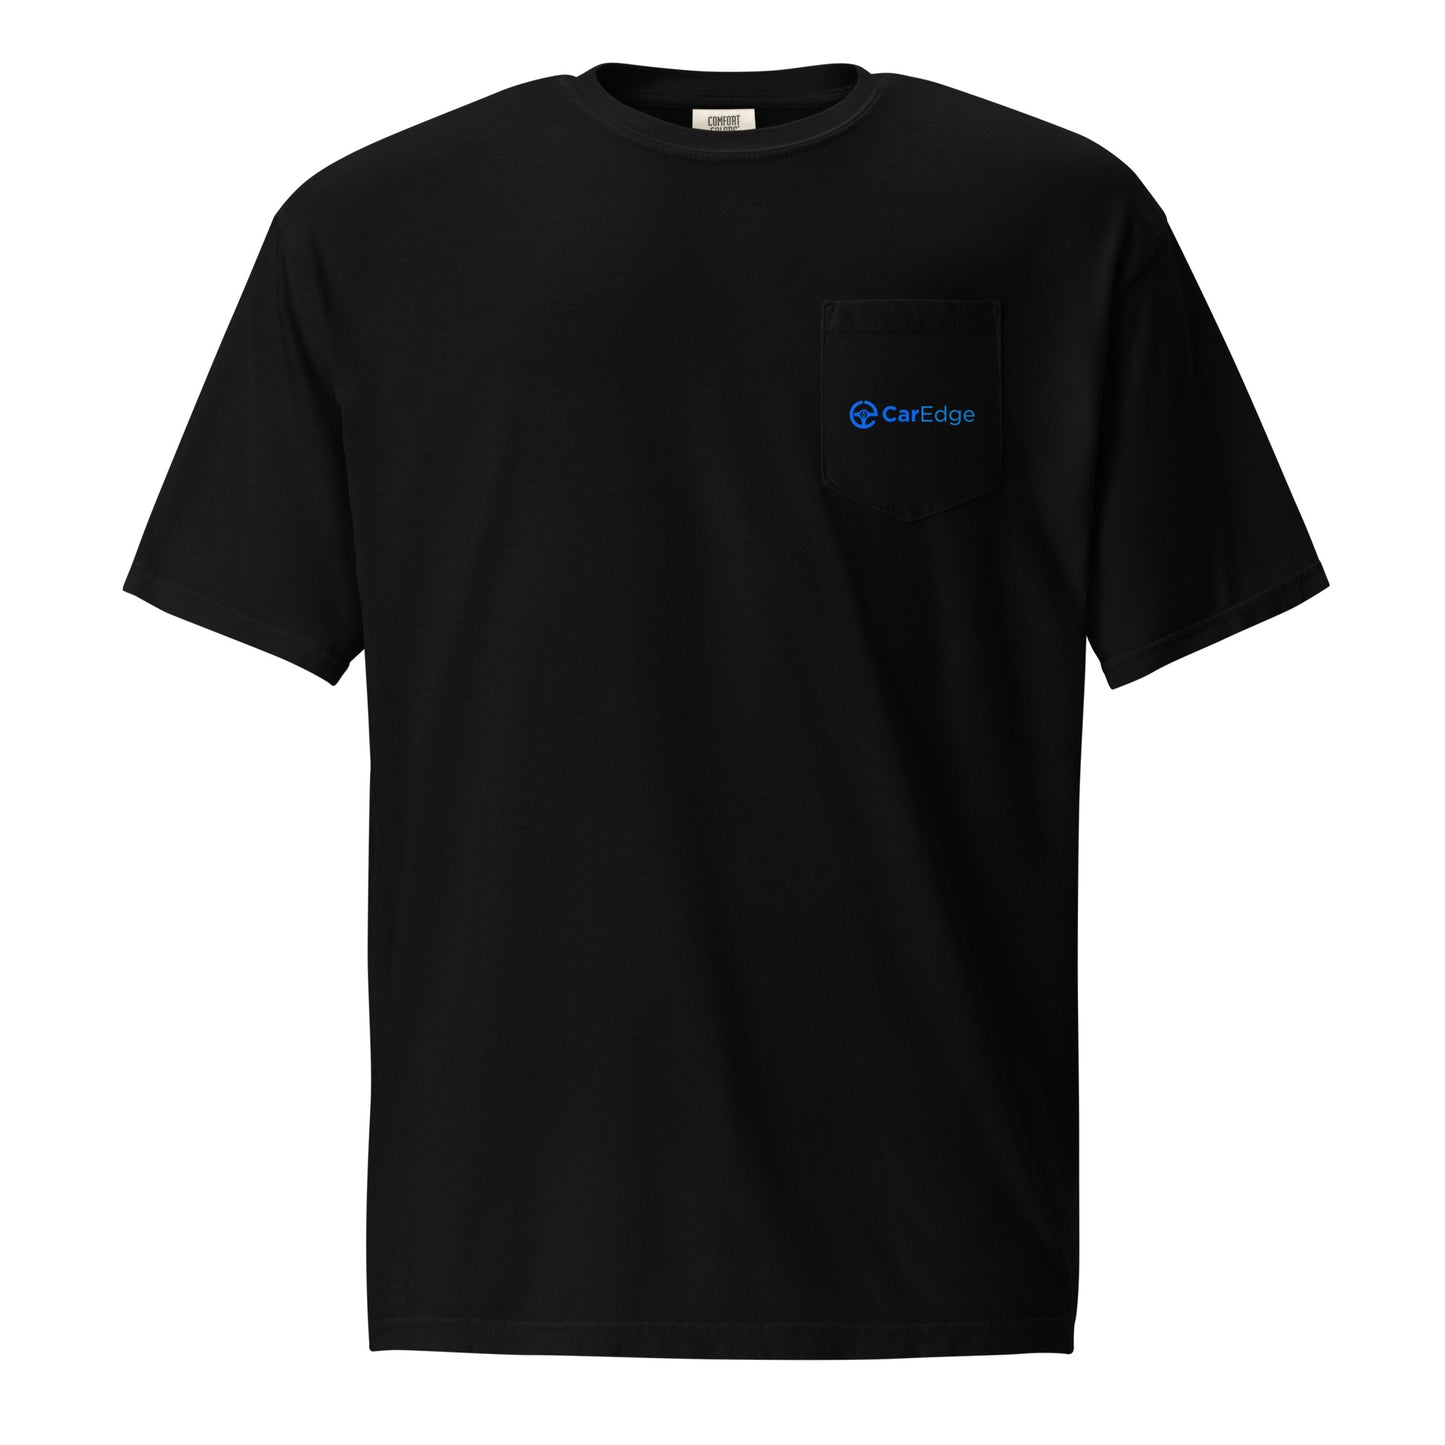 CarEdge Pocket T-Shirt - Unisex